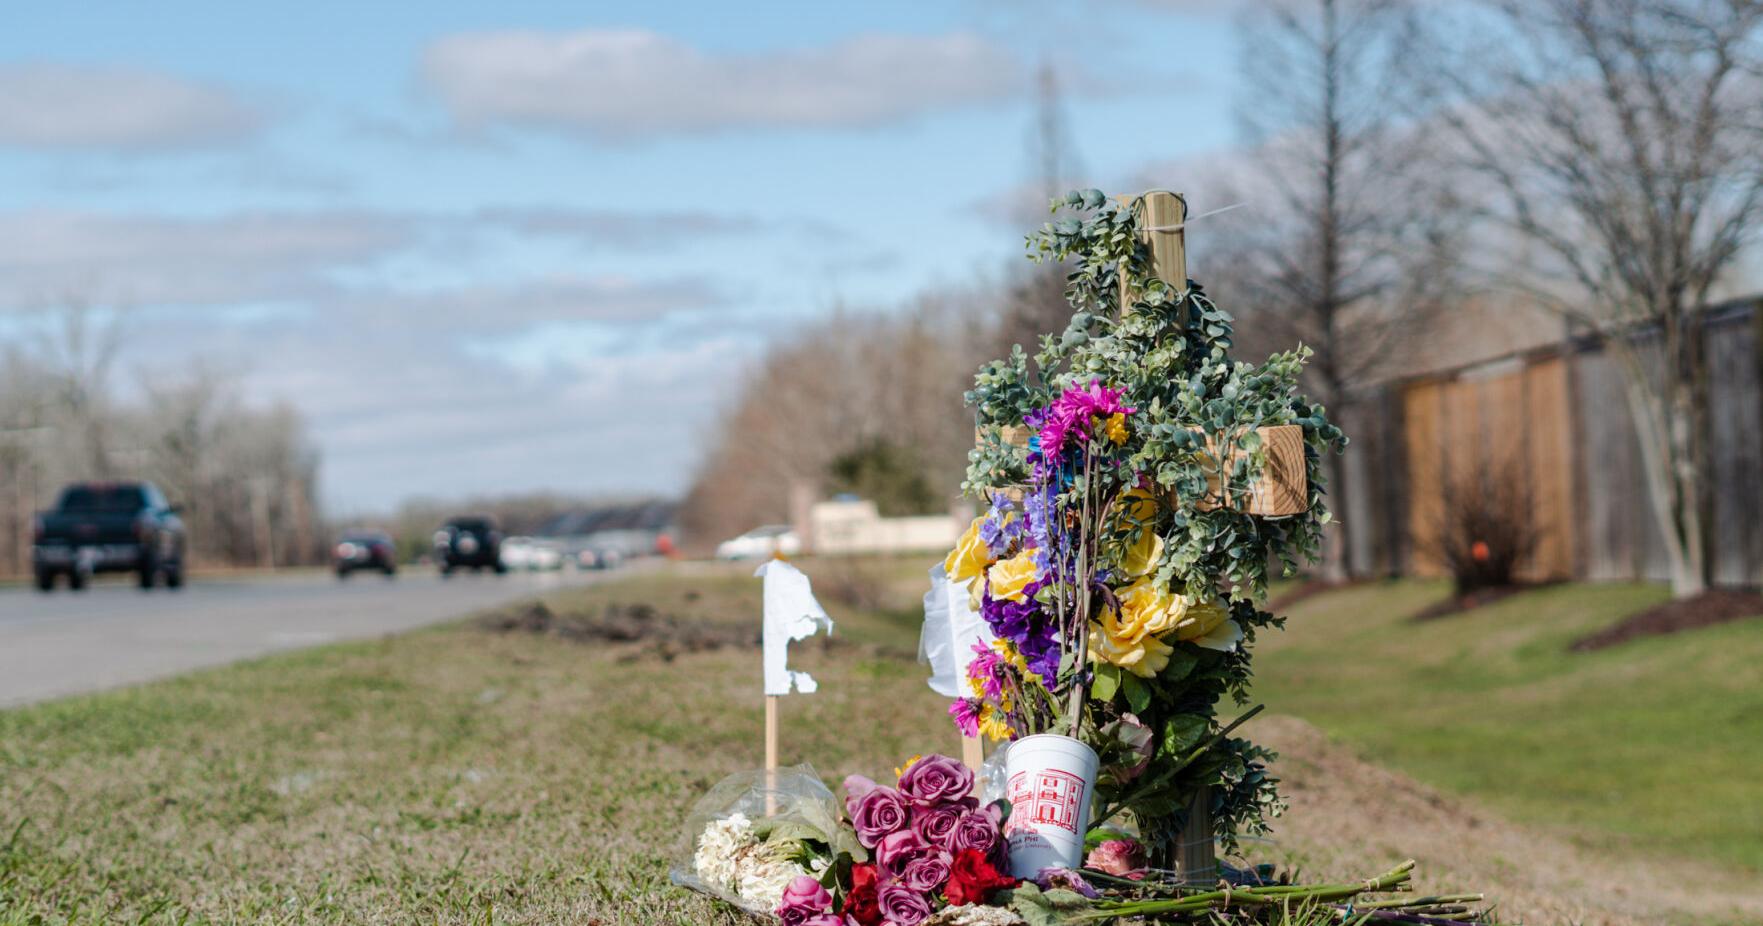 Opinion: the tragic death of Madison Brooks must not go unheard